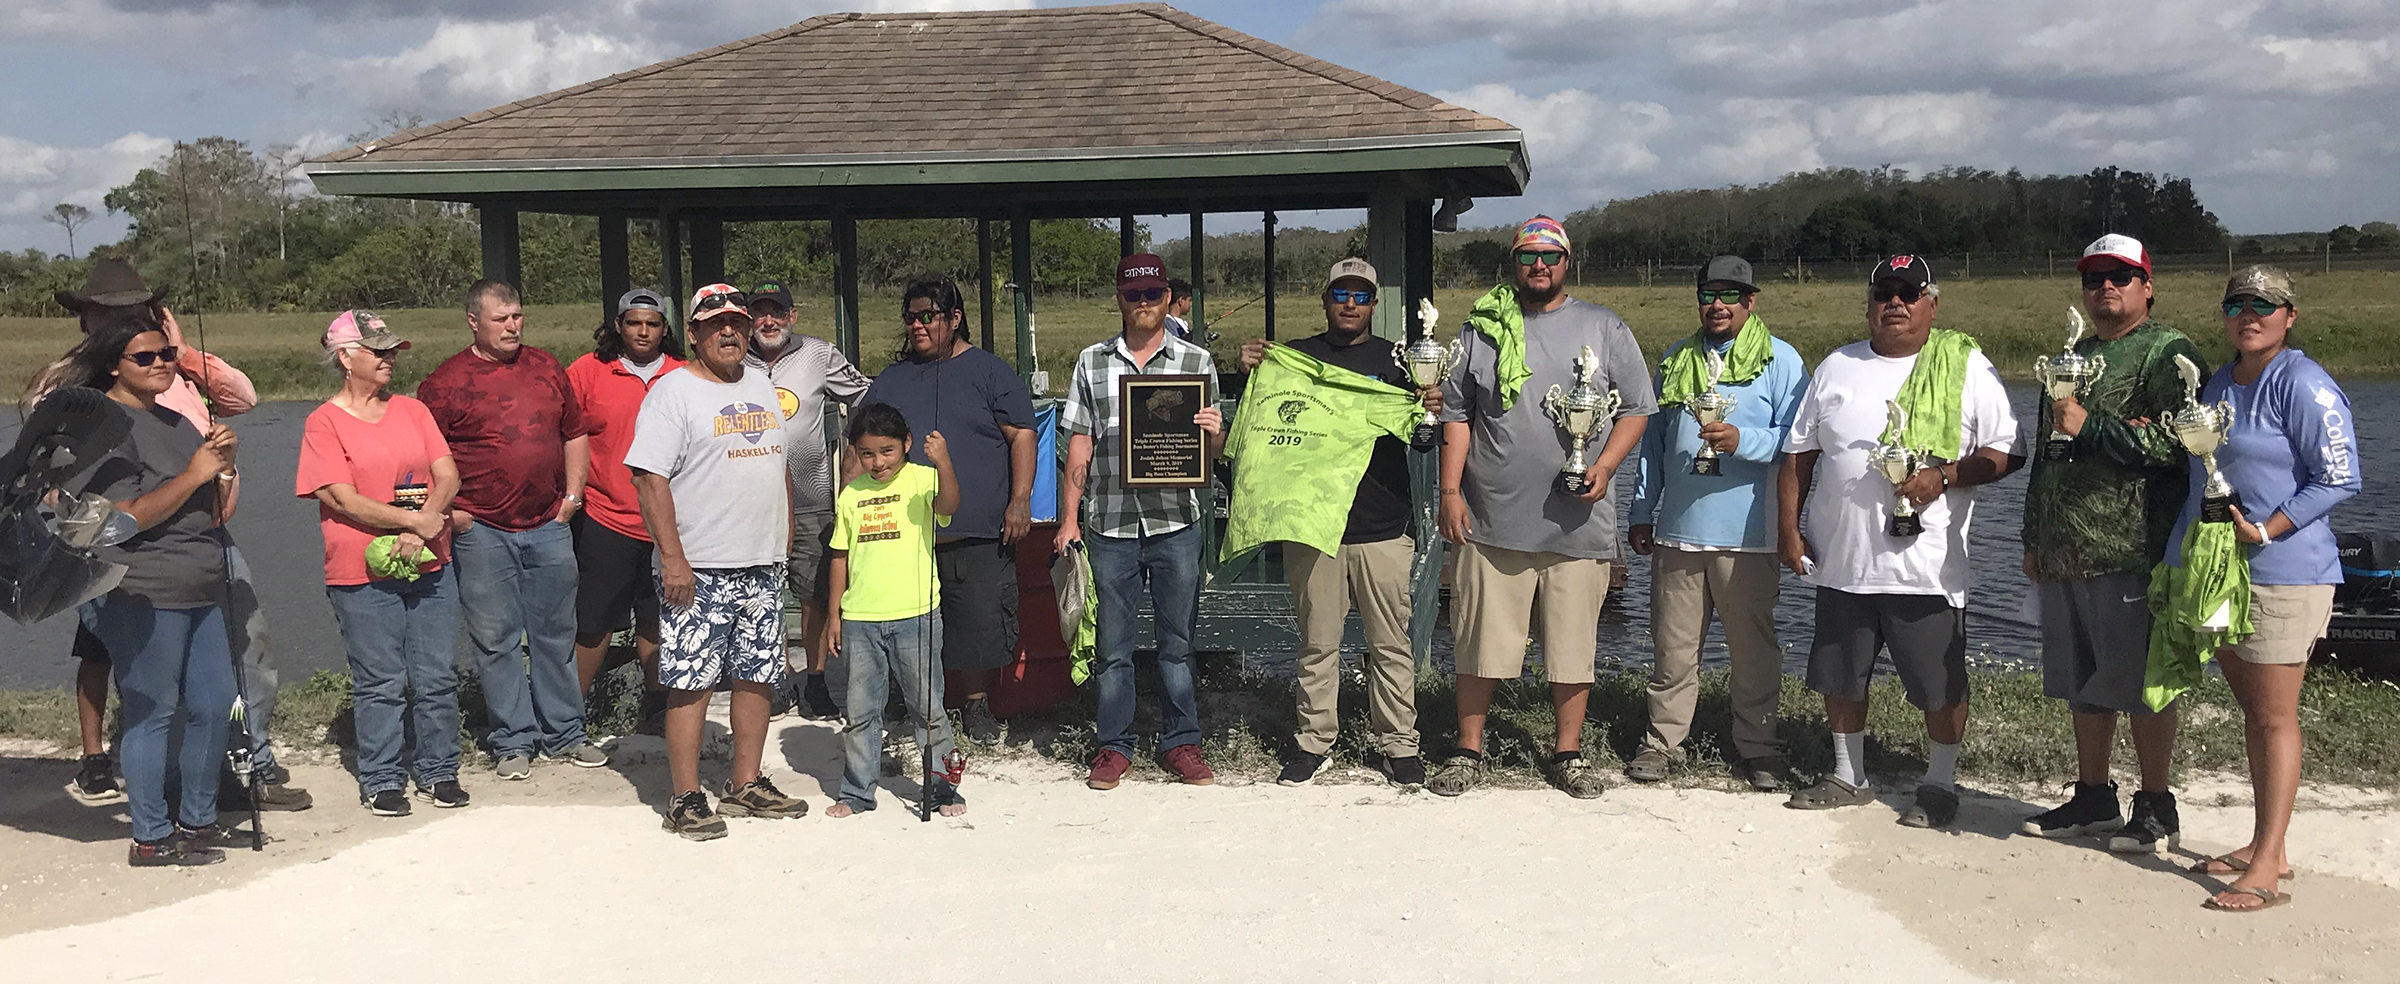 Annual fishing series kicks off in Big Cypress • The Seminole Tribune